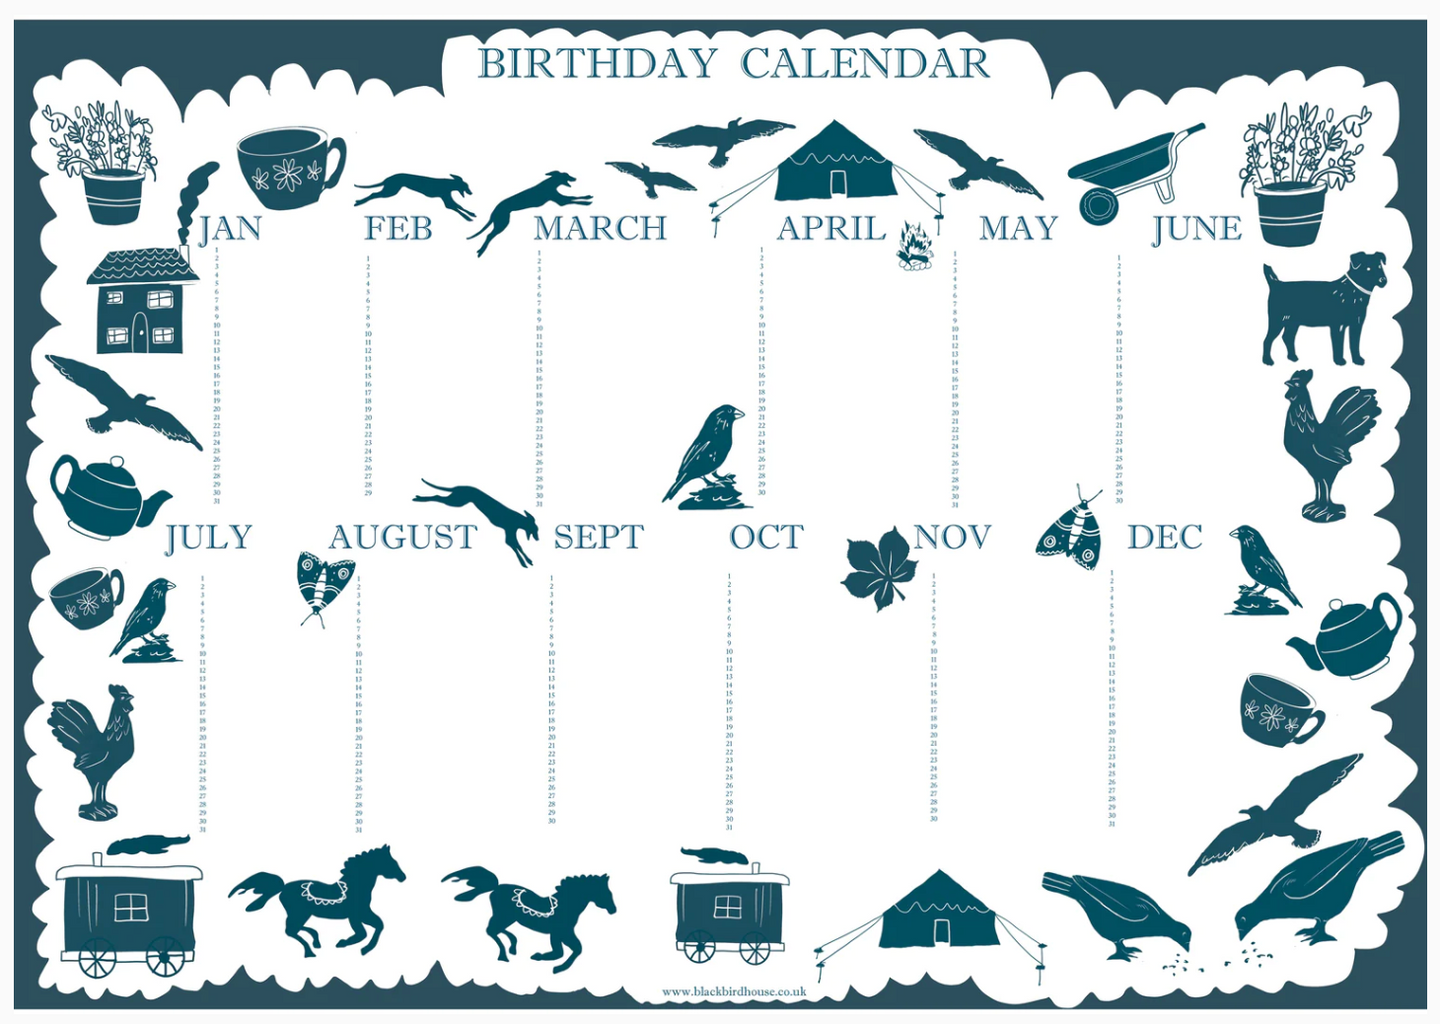 Birthday Calendar - A2